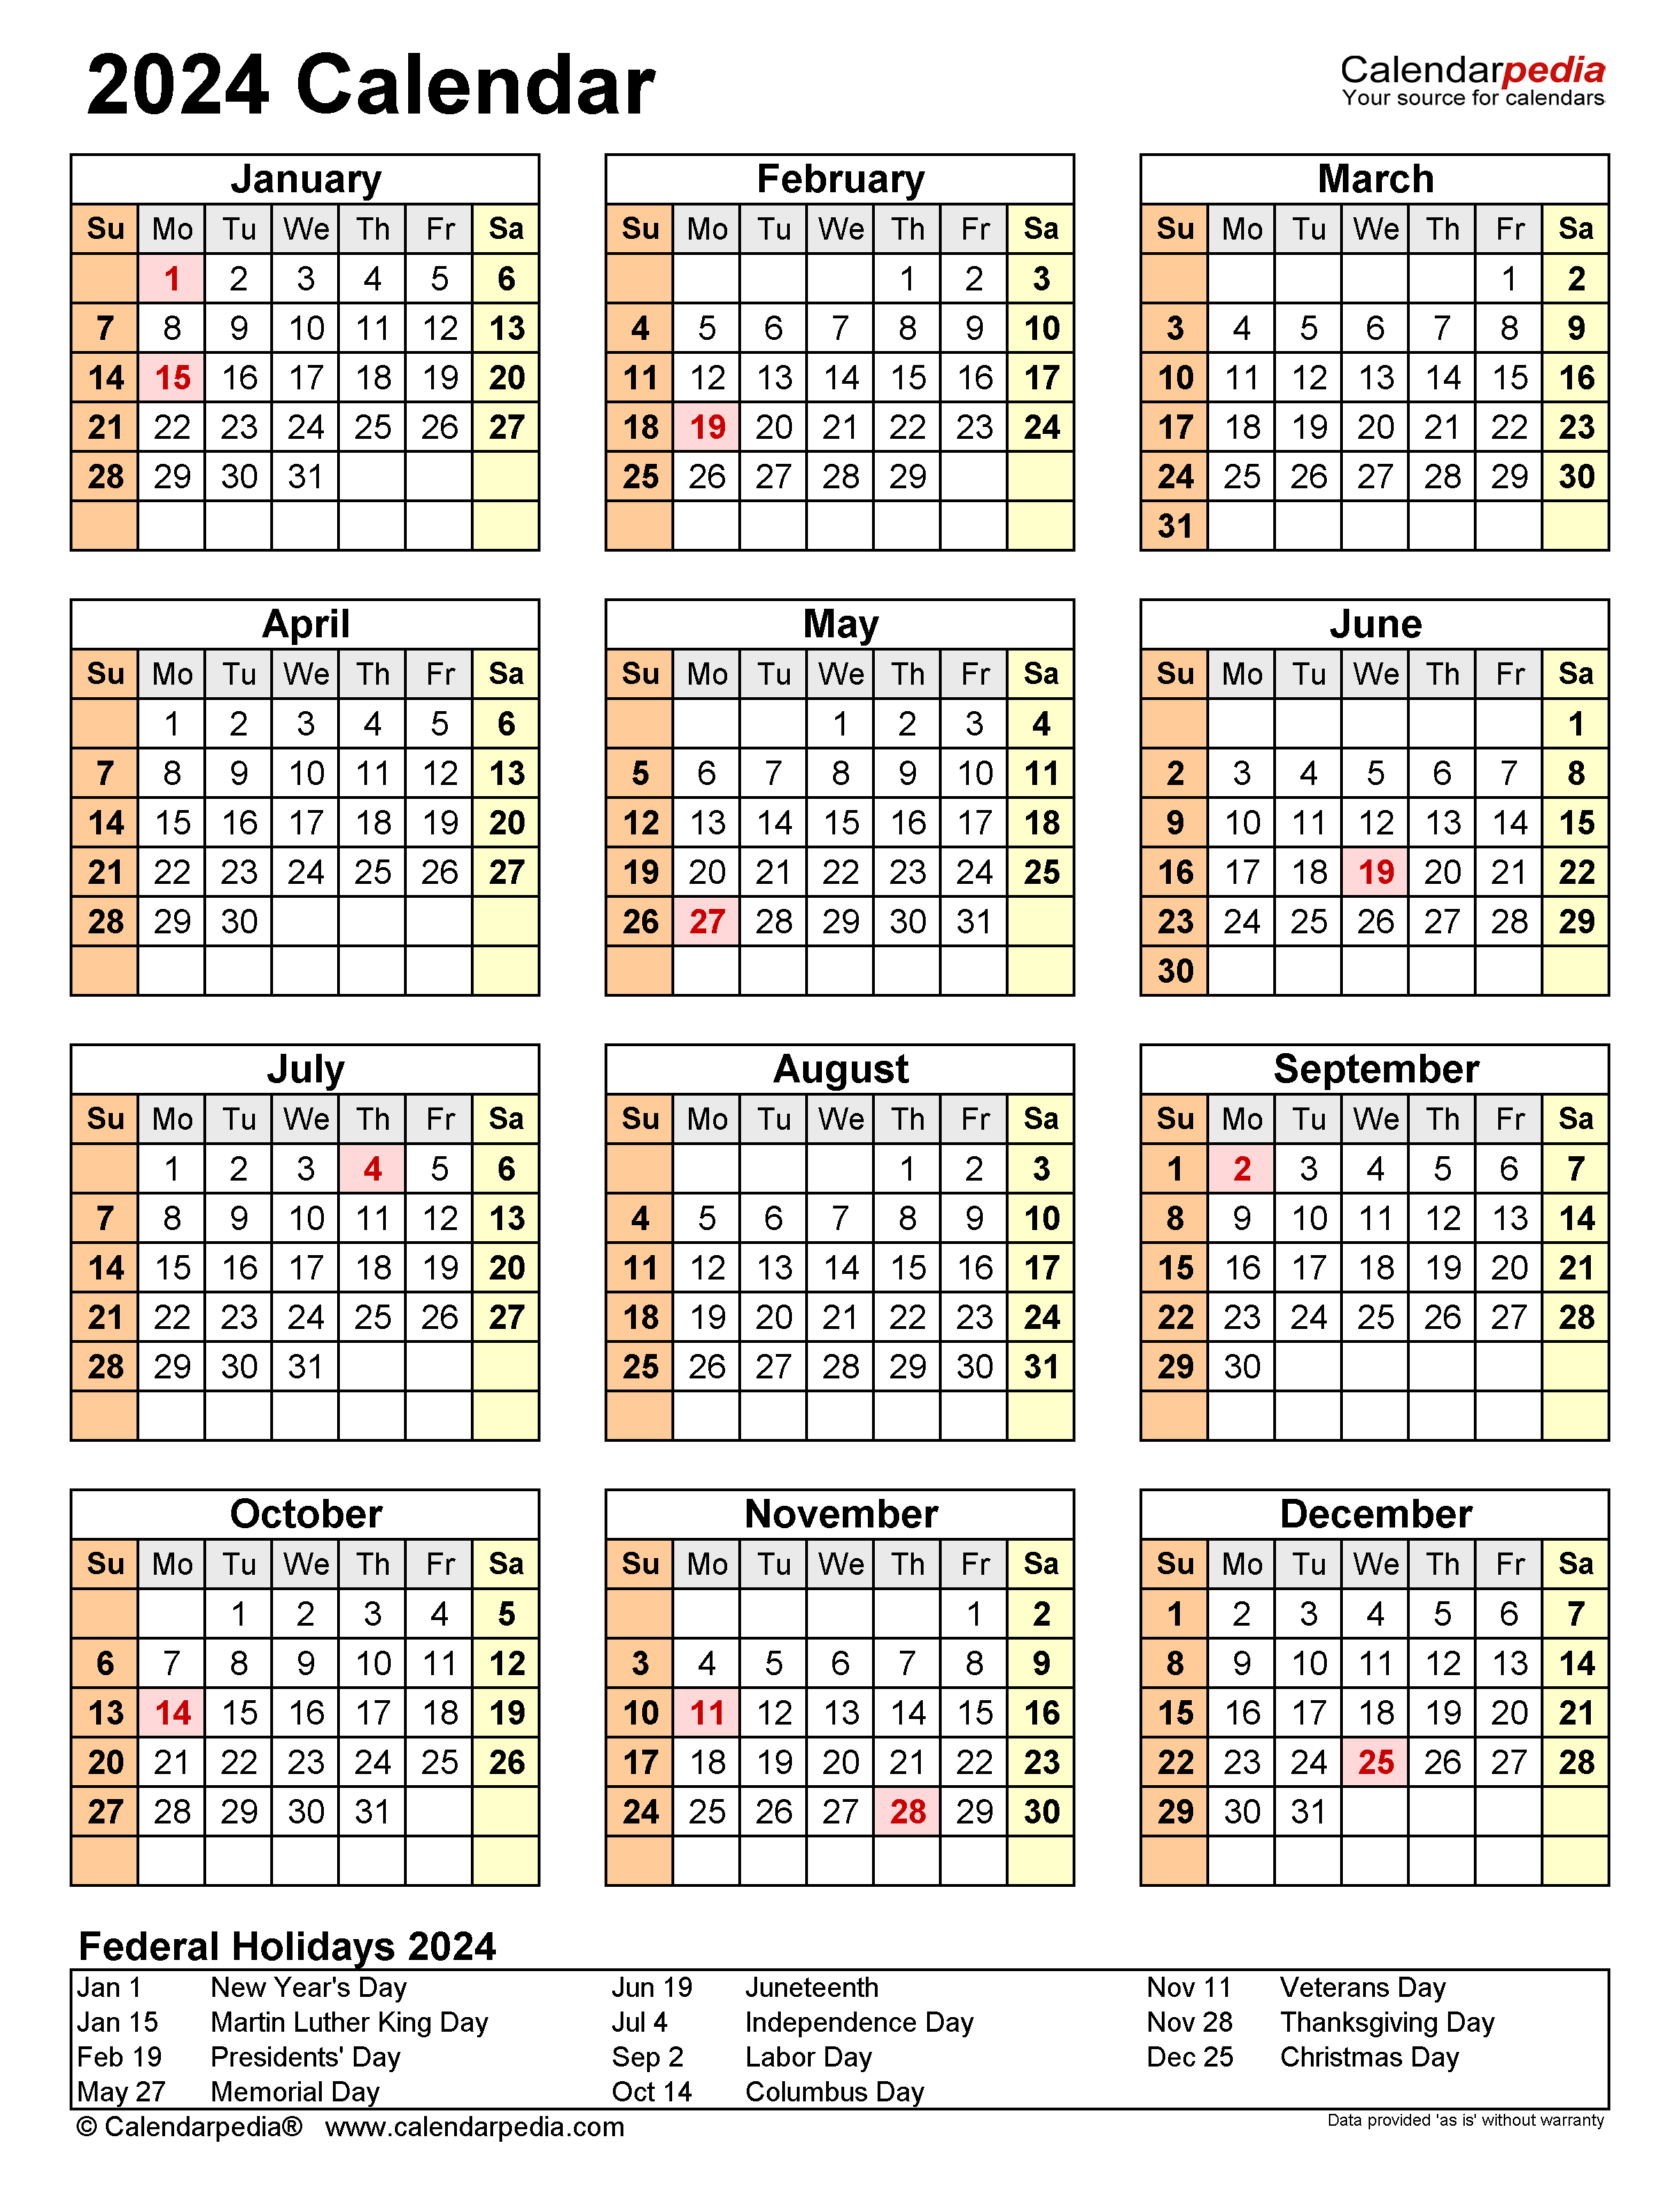 Free Printable 2024 Calendar With Holidays Crownflourmills - Free Printable 2024 Monthly Calendar With Holidays Portrait